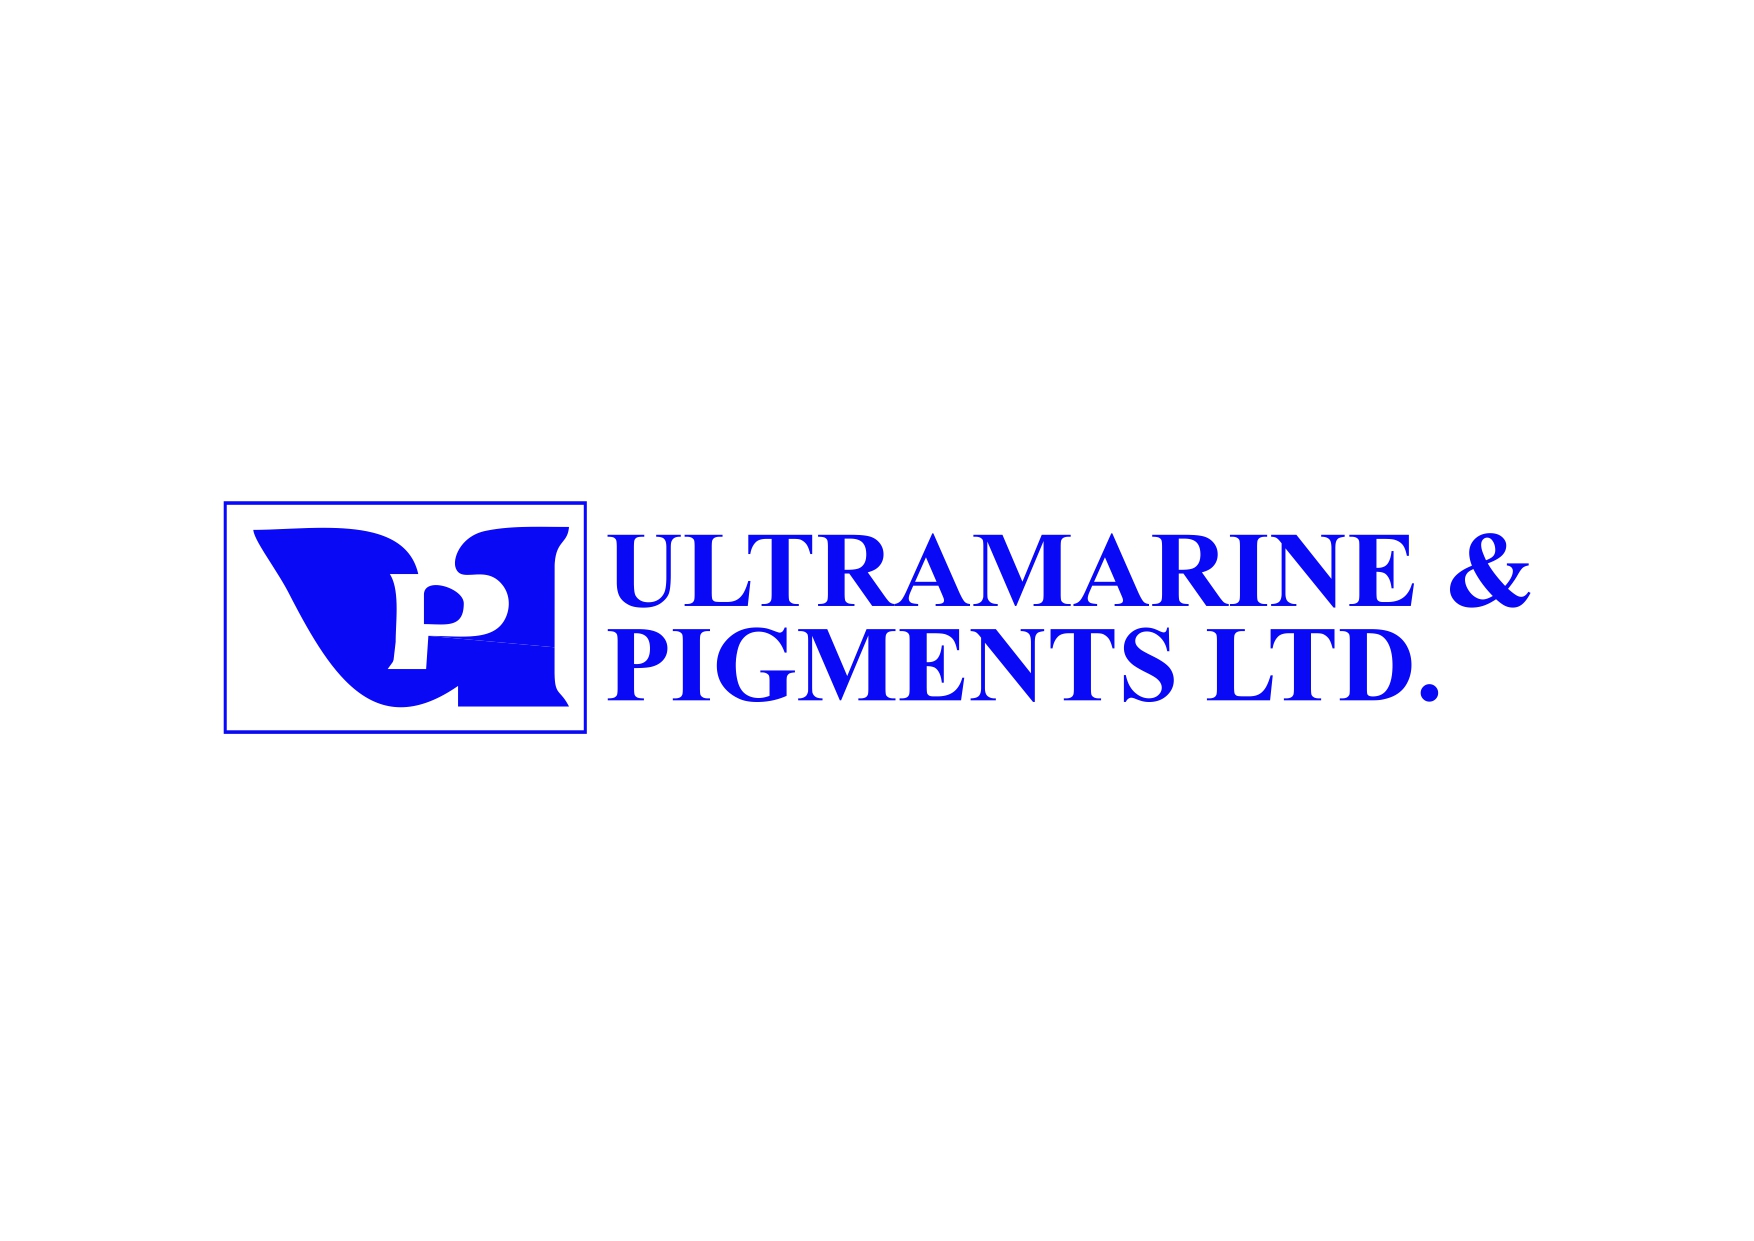 Partnership with Ultramarine & Pigments LTD